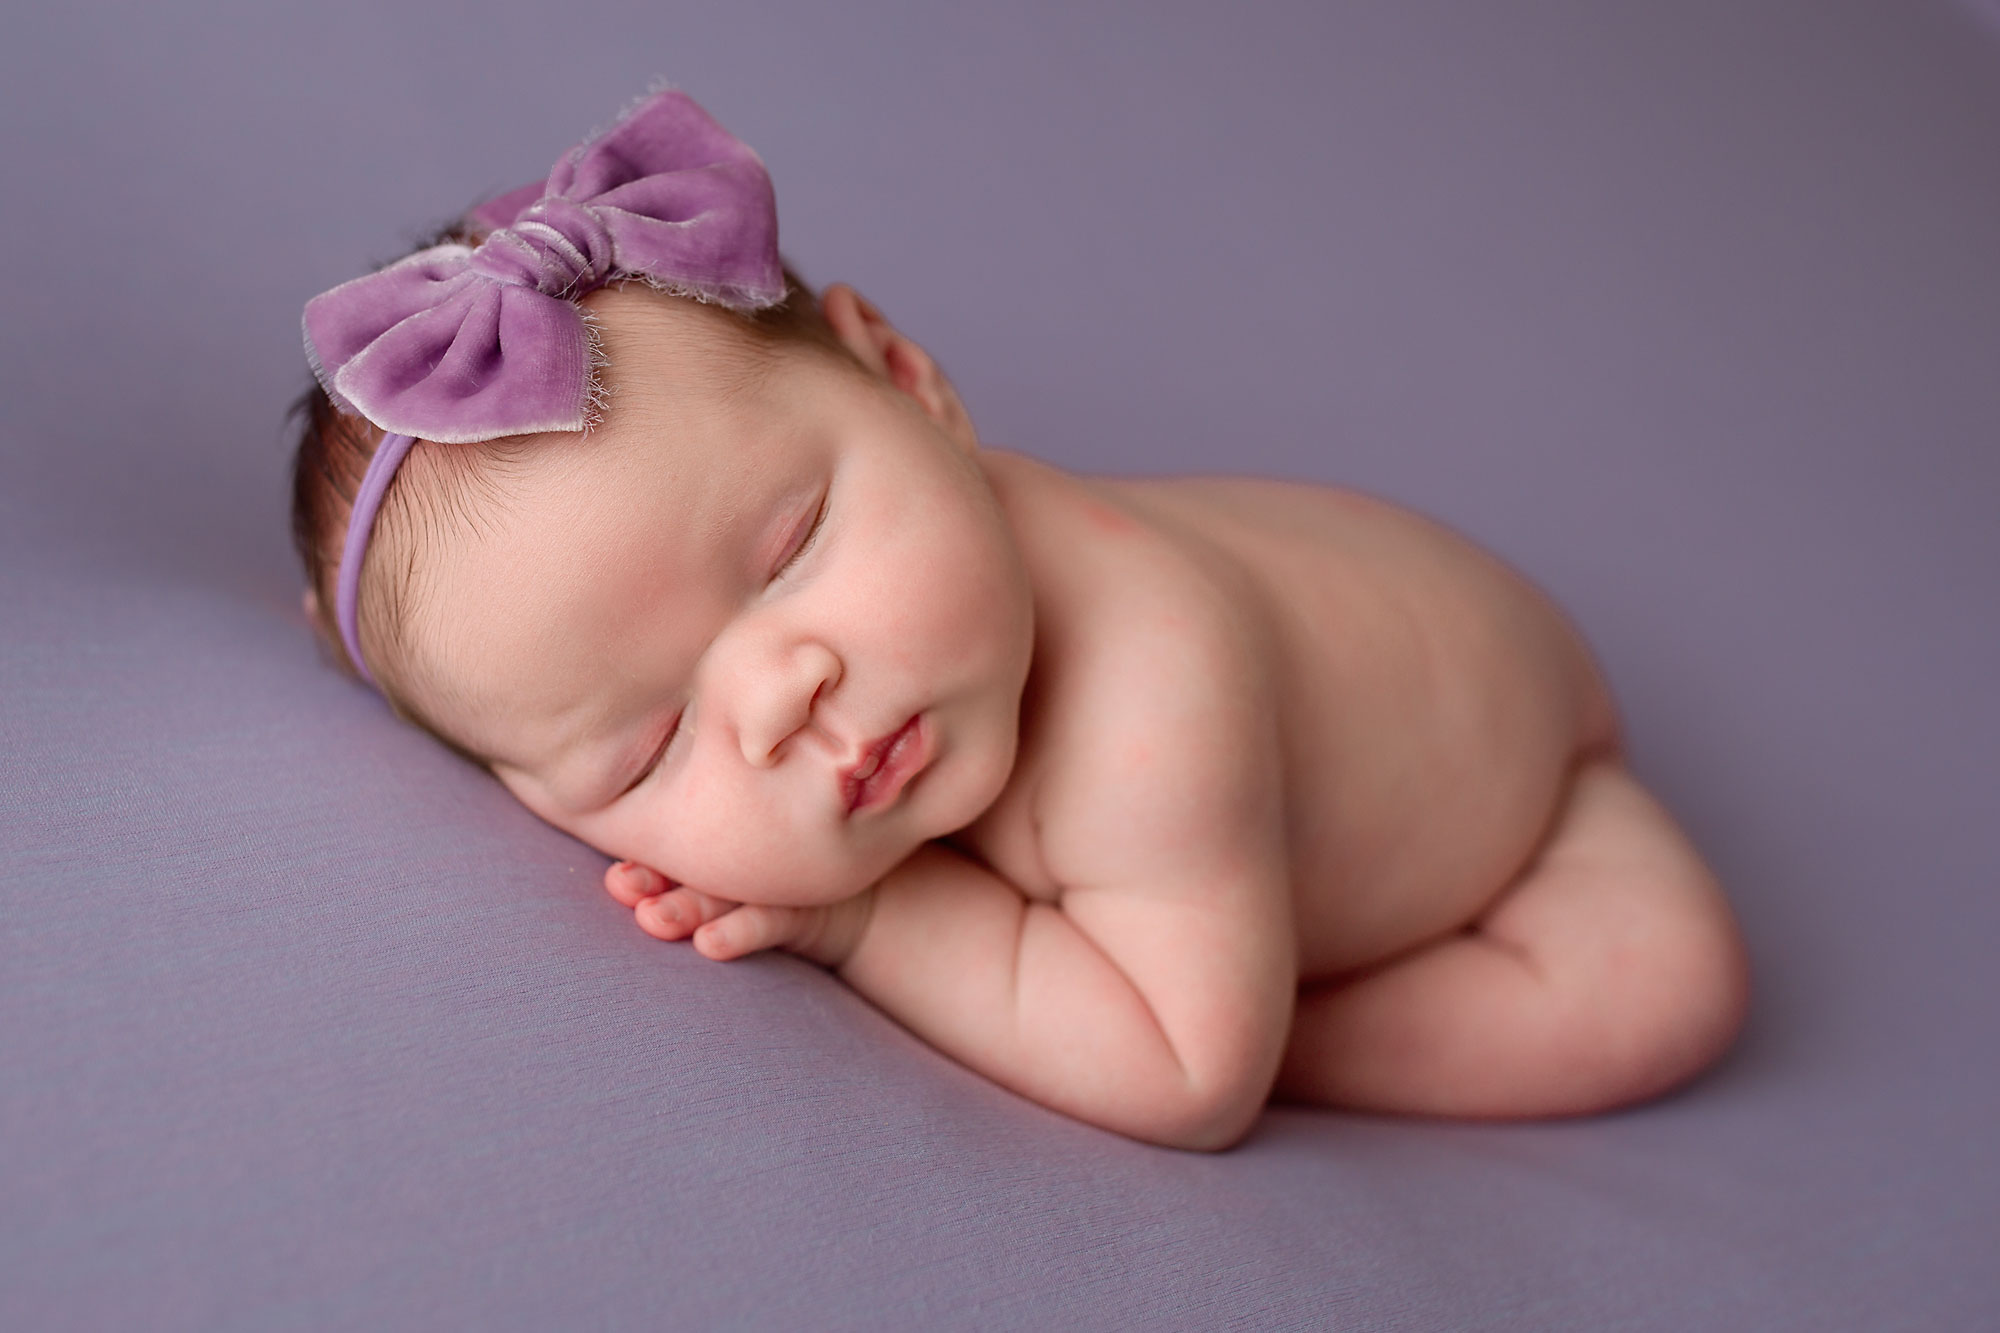 newborn baby girl sleeping on a blanket during her essex county nj newborn photo session